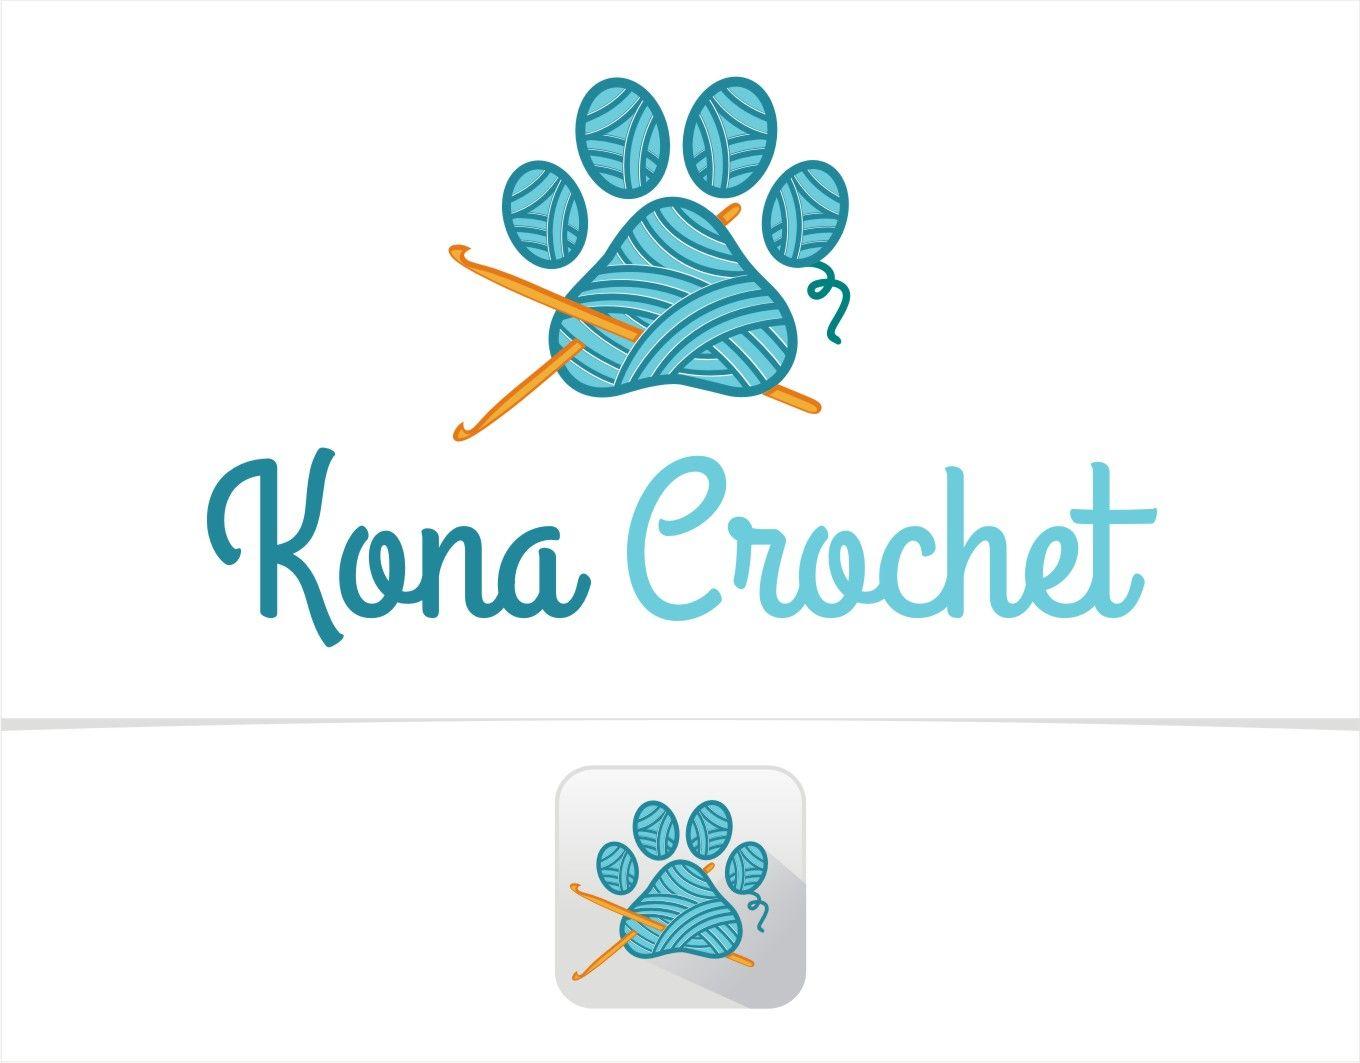 crochet logo ideas 3